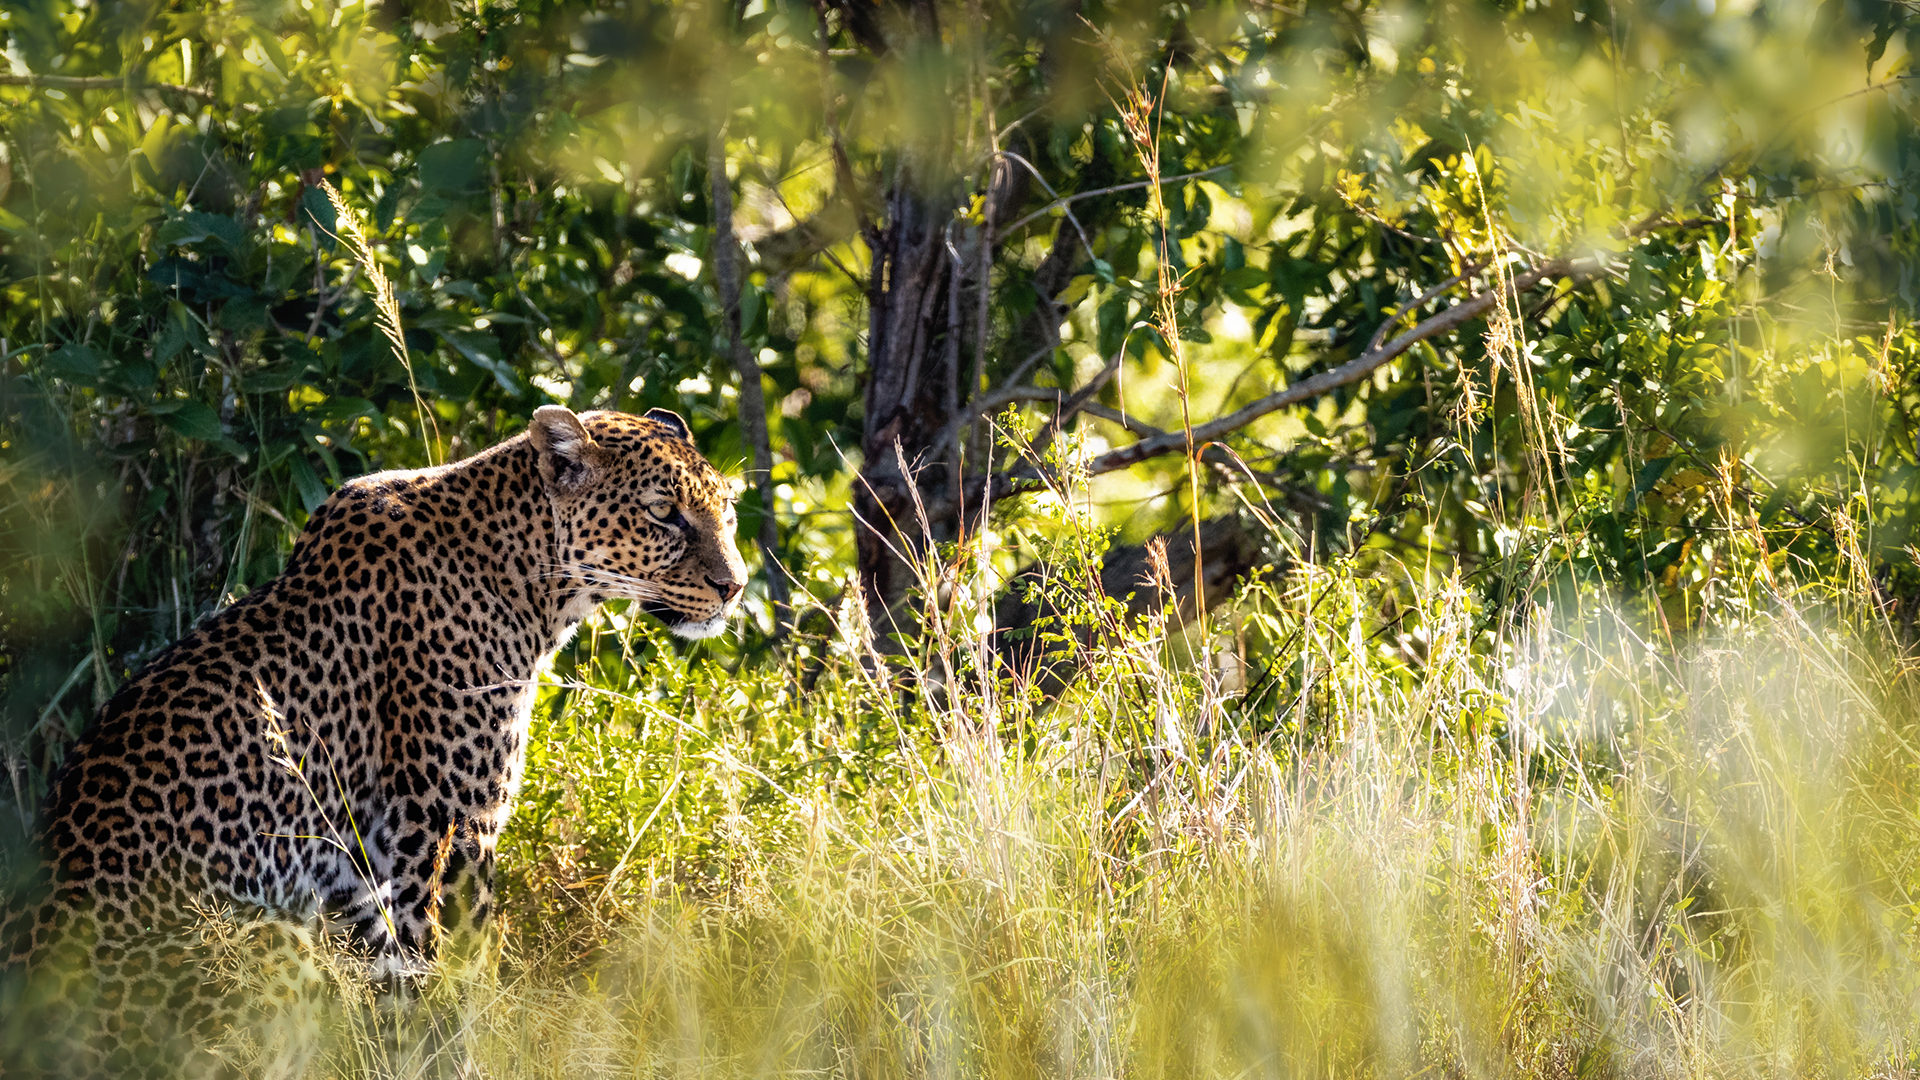 Leopard in Wild of Kenya Africa.jpg